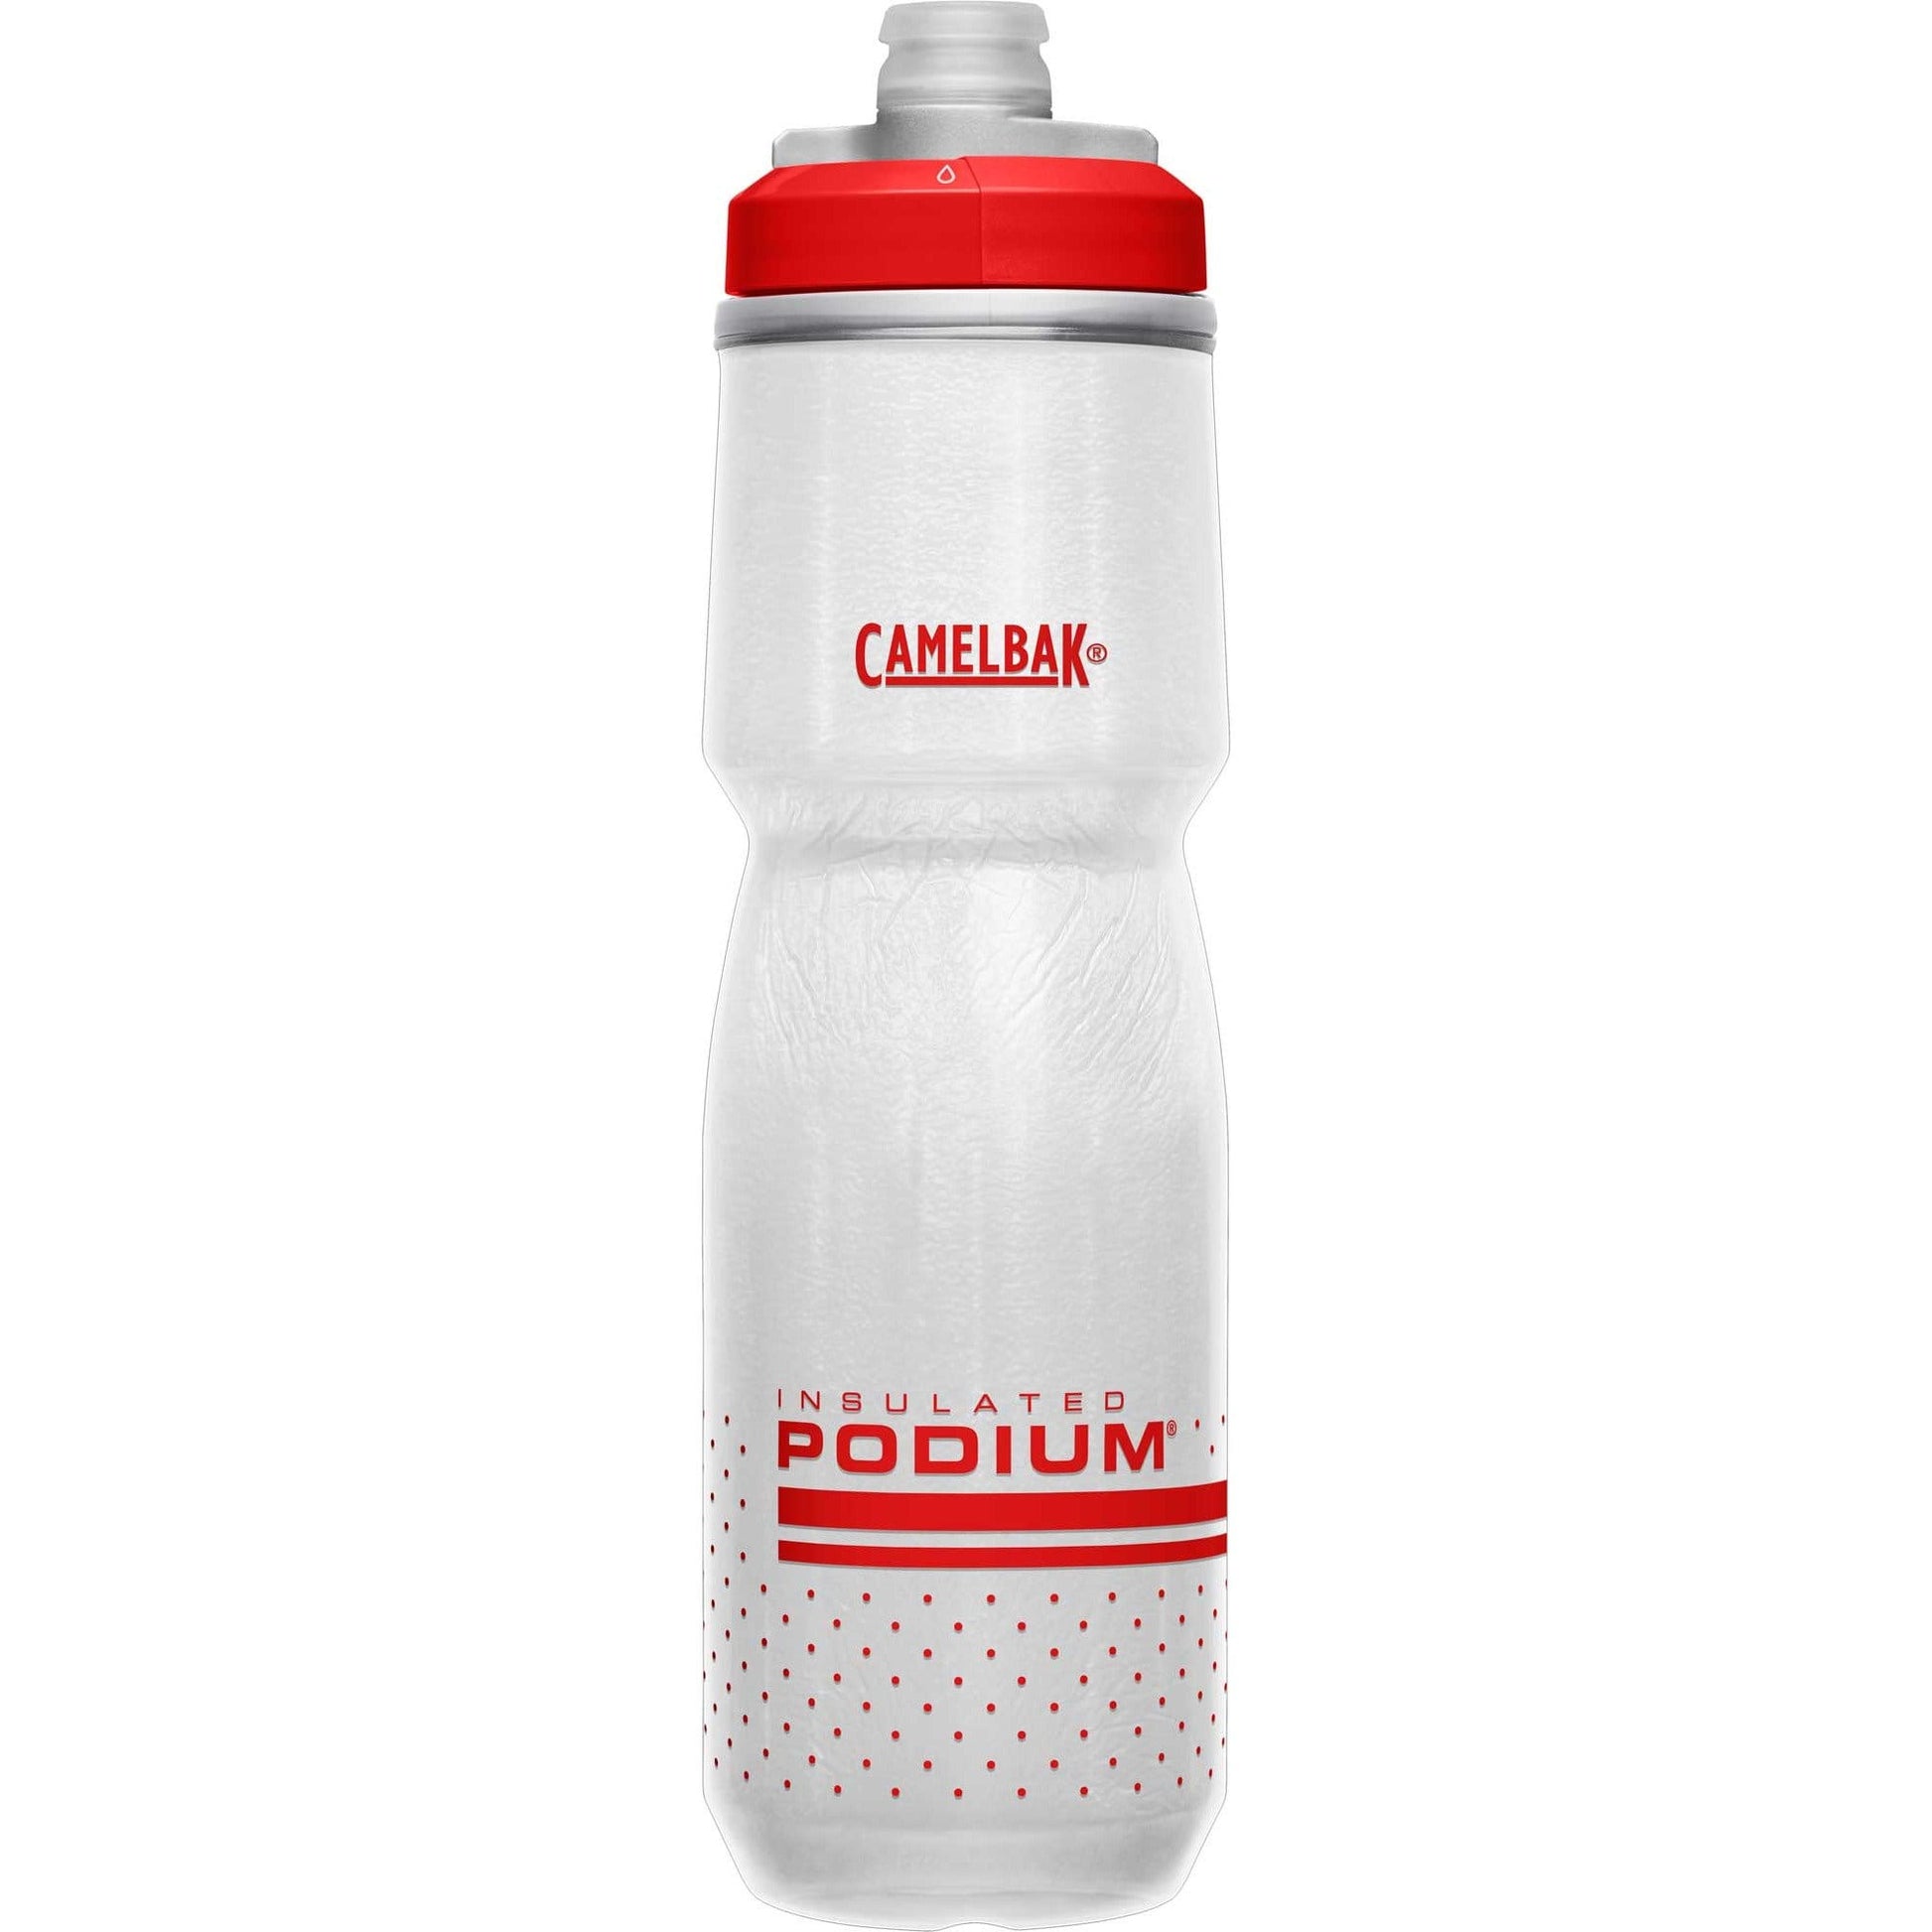 Camelbak Podium Big Chill Bike Water Bottle - 24oz (White/Red)